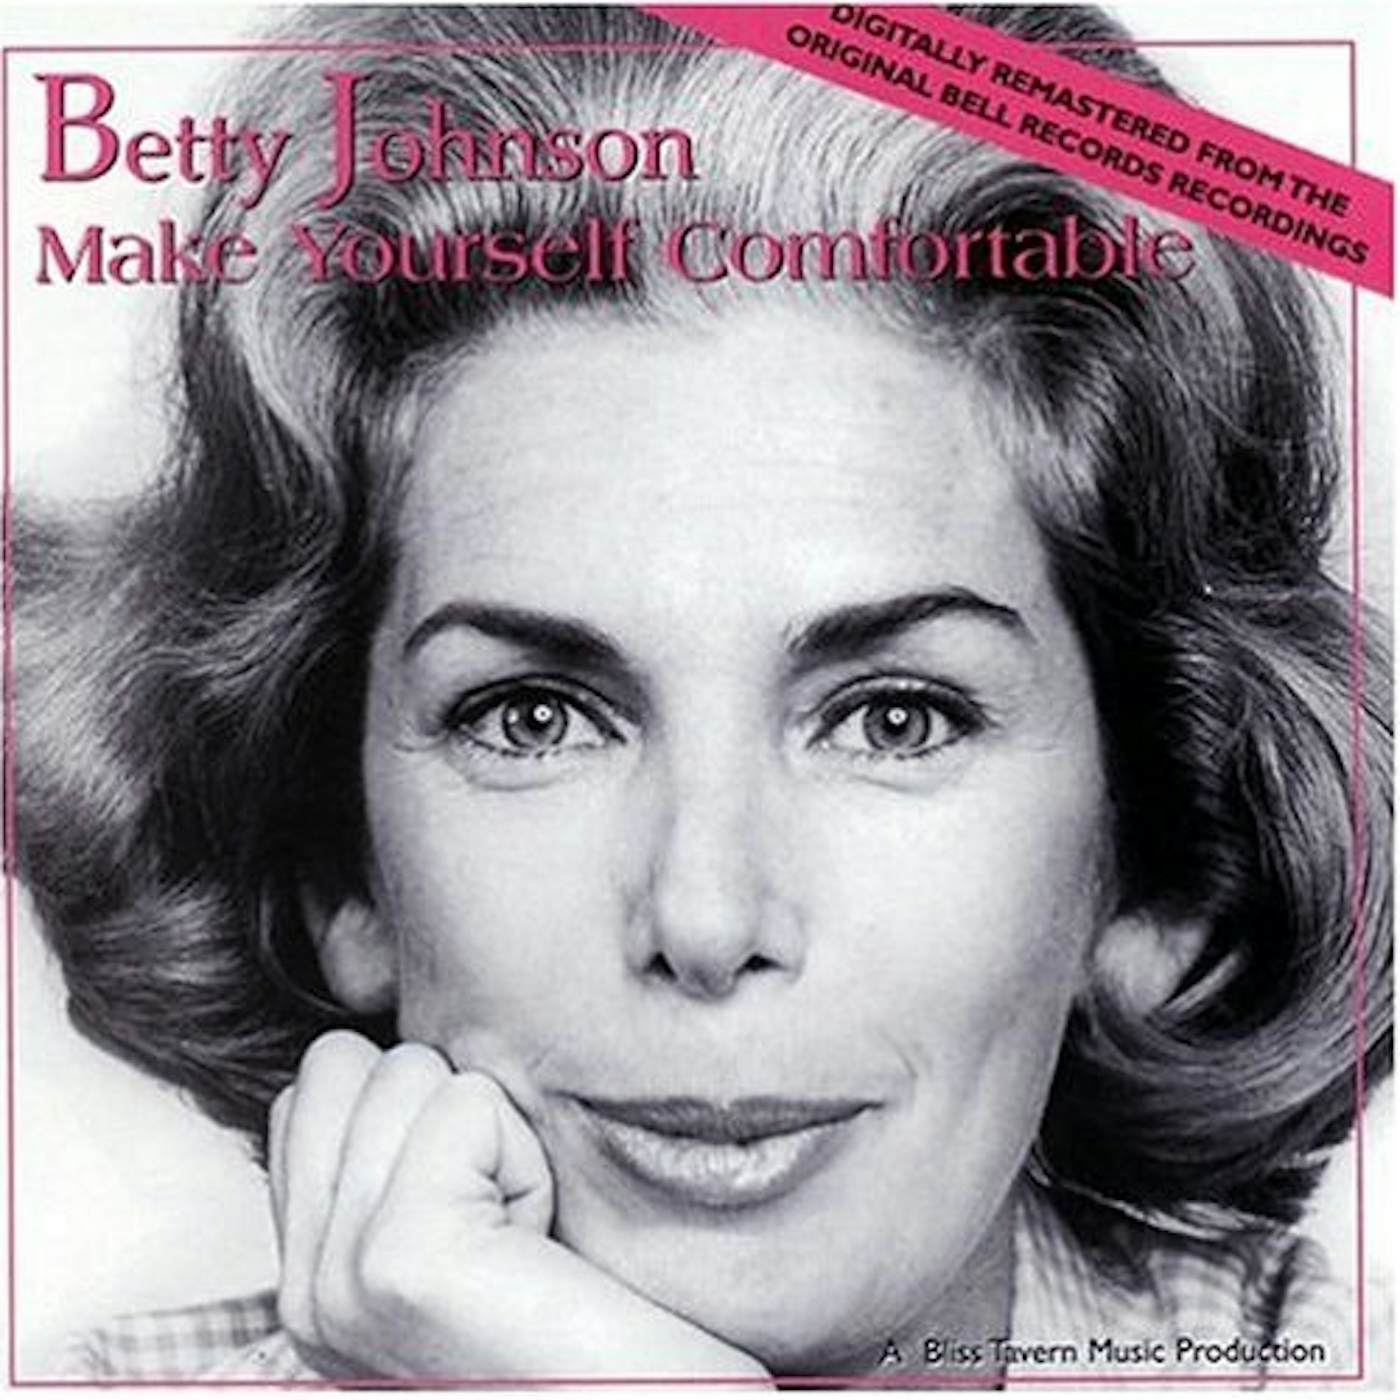 Betty Johnson MAKE YOURSELF COMFORTABLE CD